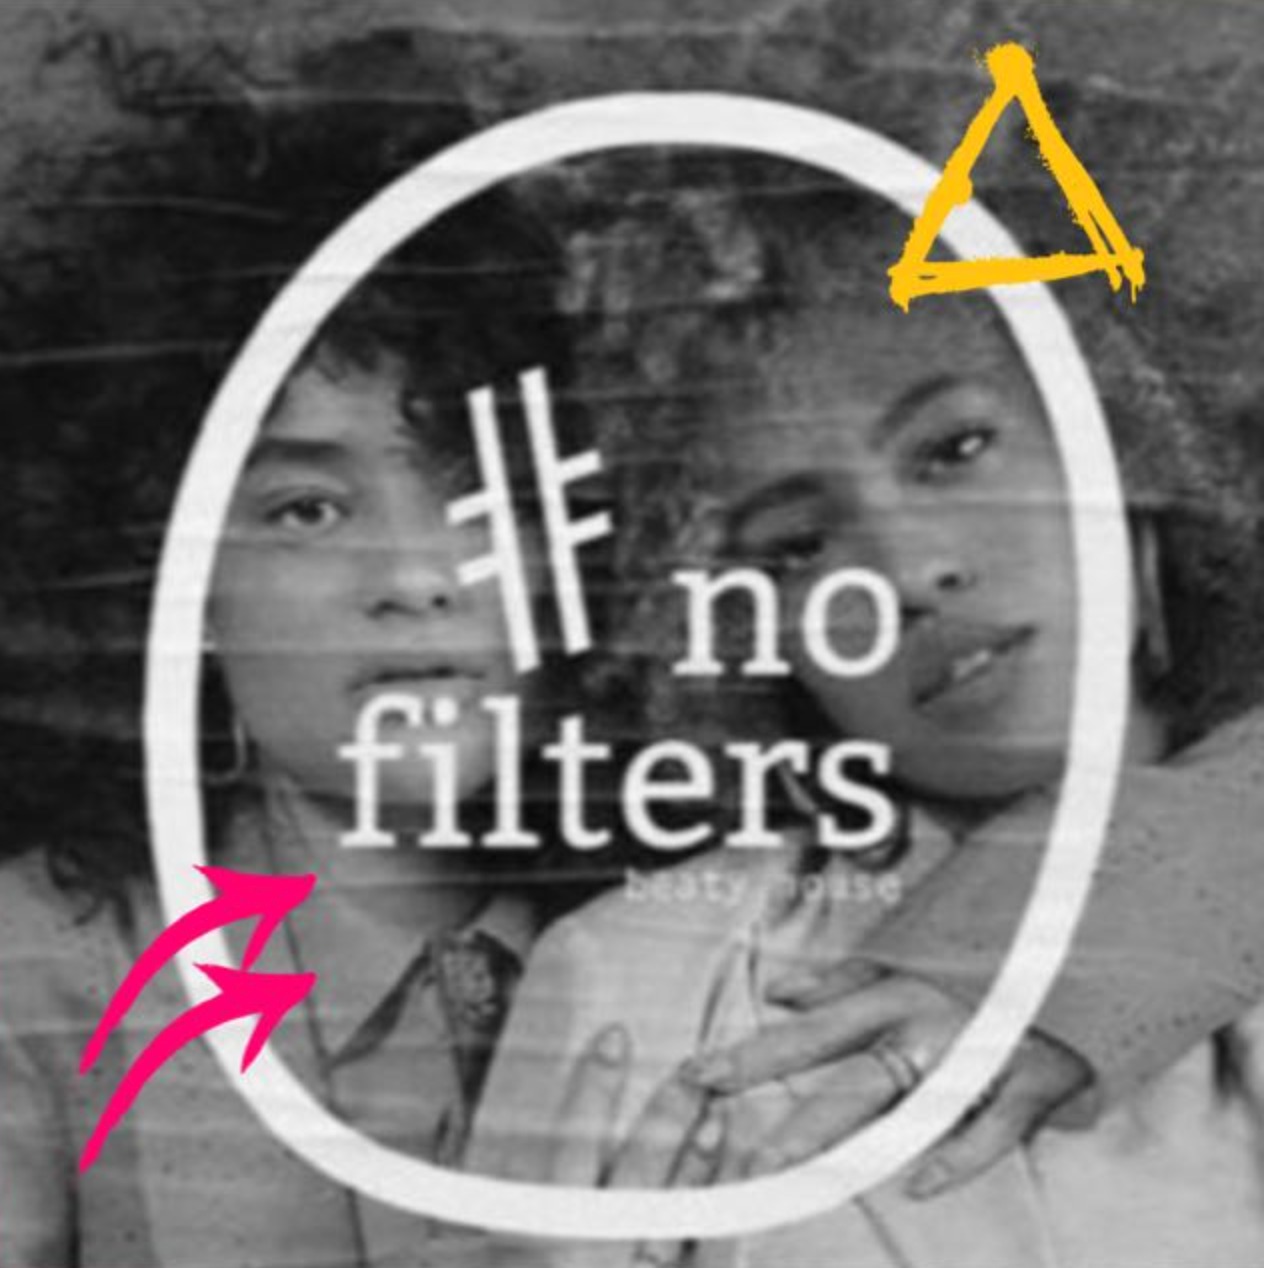 No Filters